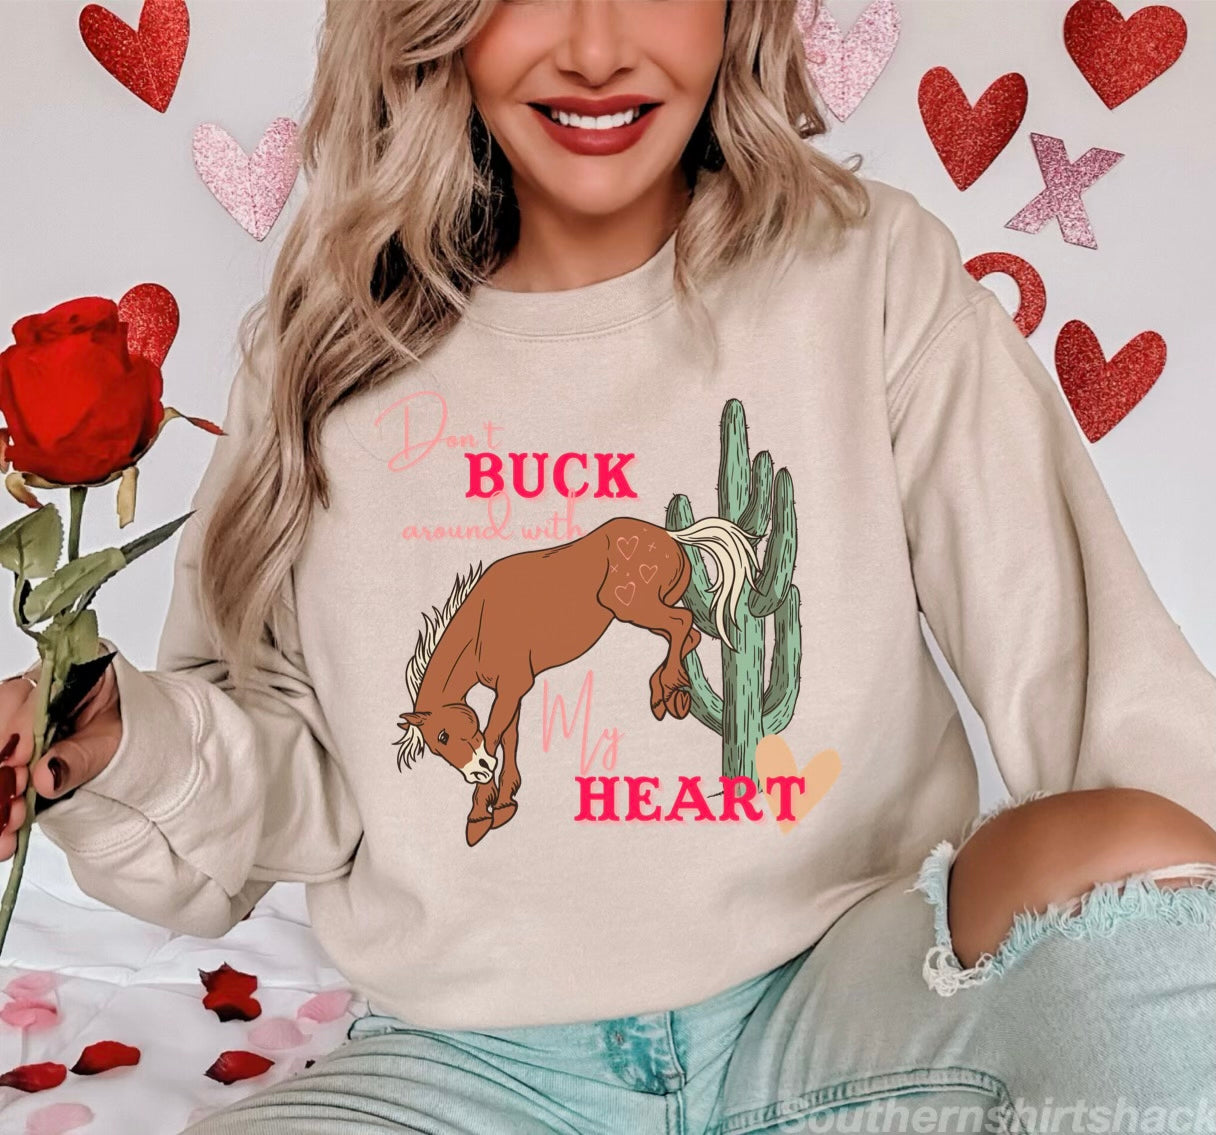 Don’t Buck Around with my Heart Sweatshirt